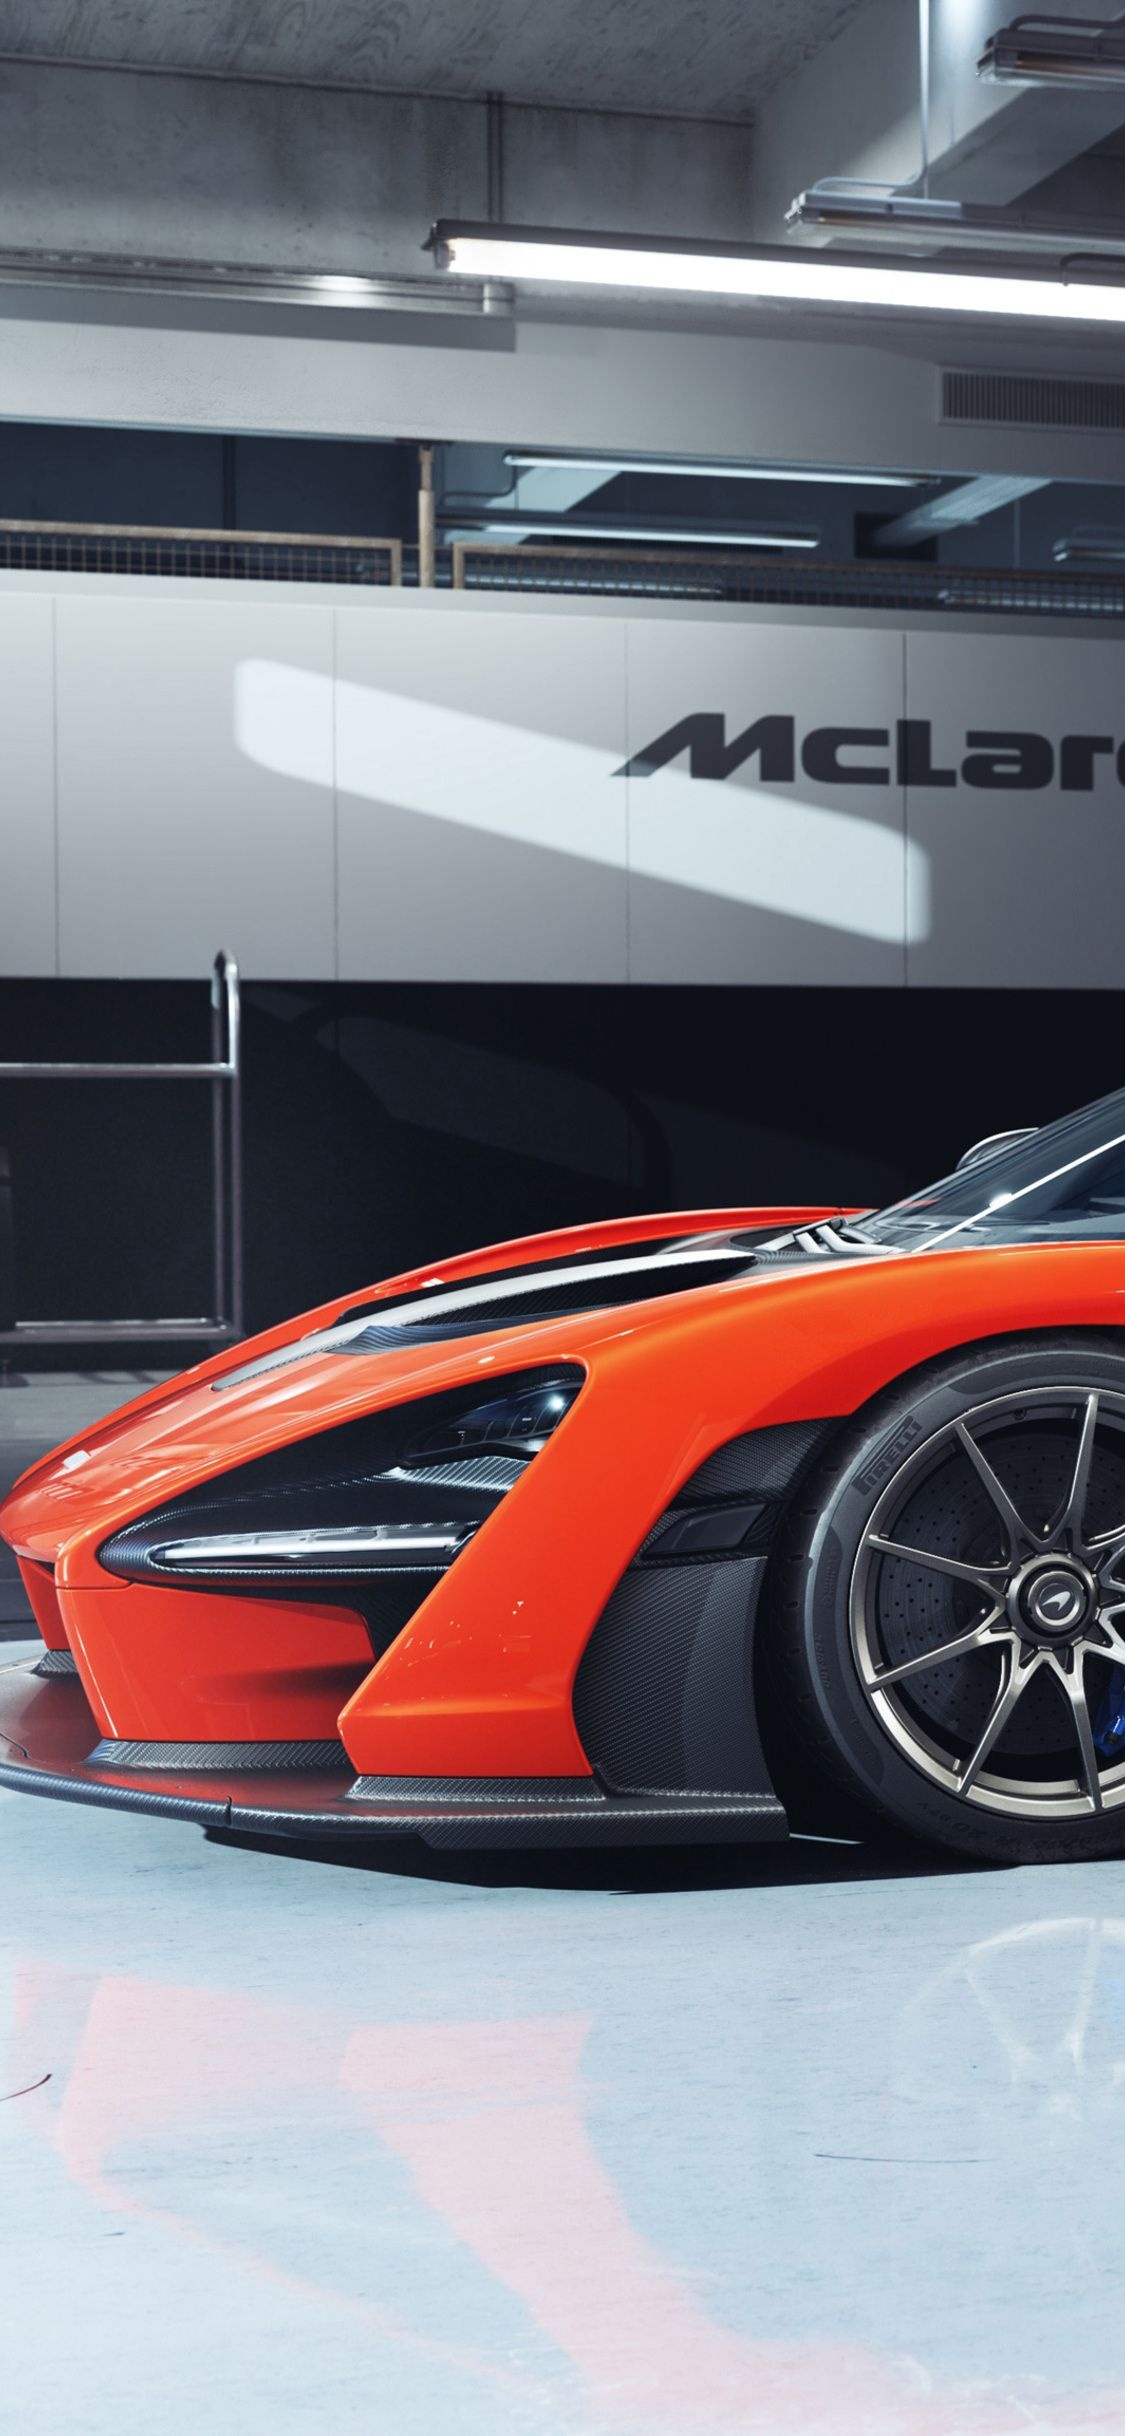 McLaren Artura, Auto enthusiast, Stunning iPhone wallpapers, Exclusive backgrounds, 1130x2440 HD Handy